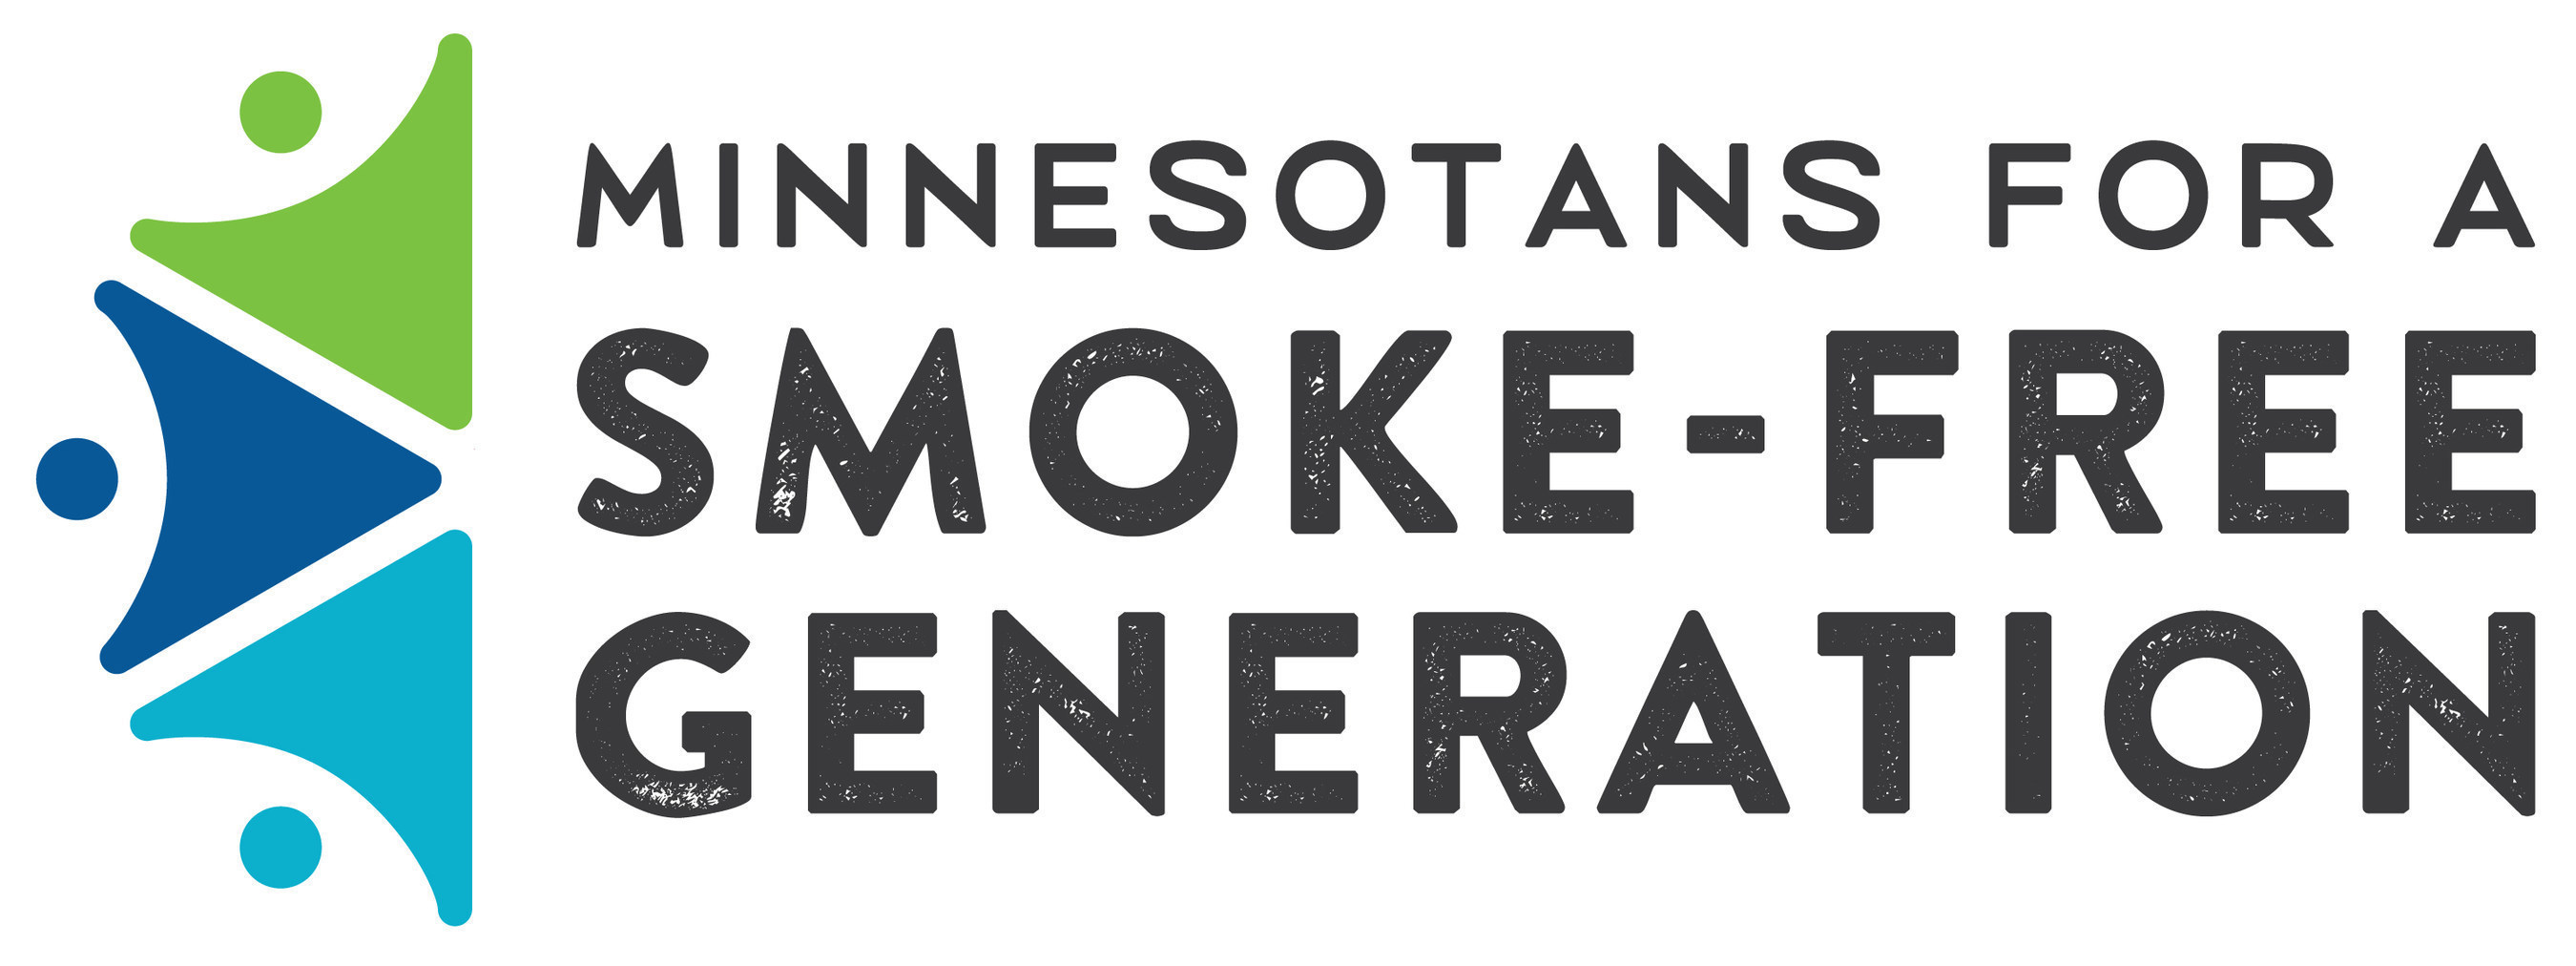 Minnesotans For A Smoke-Free Generation Logo